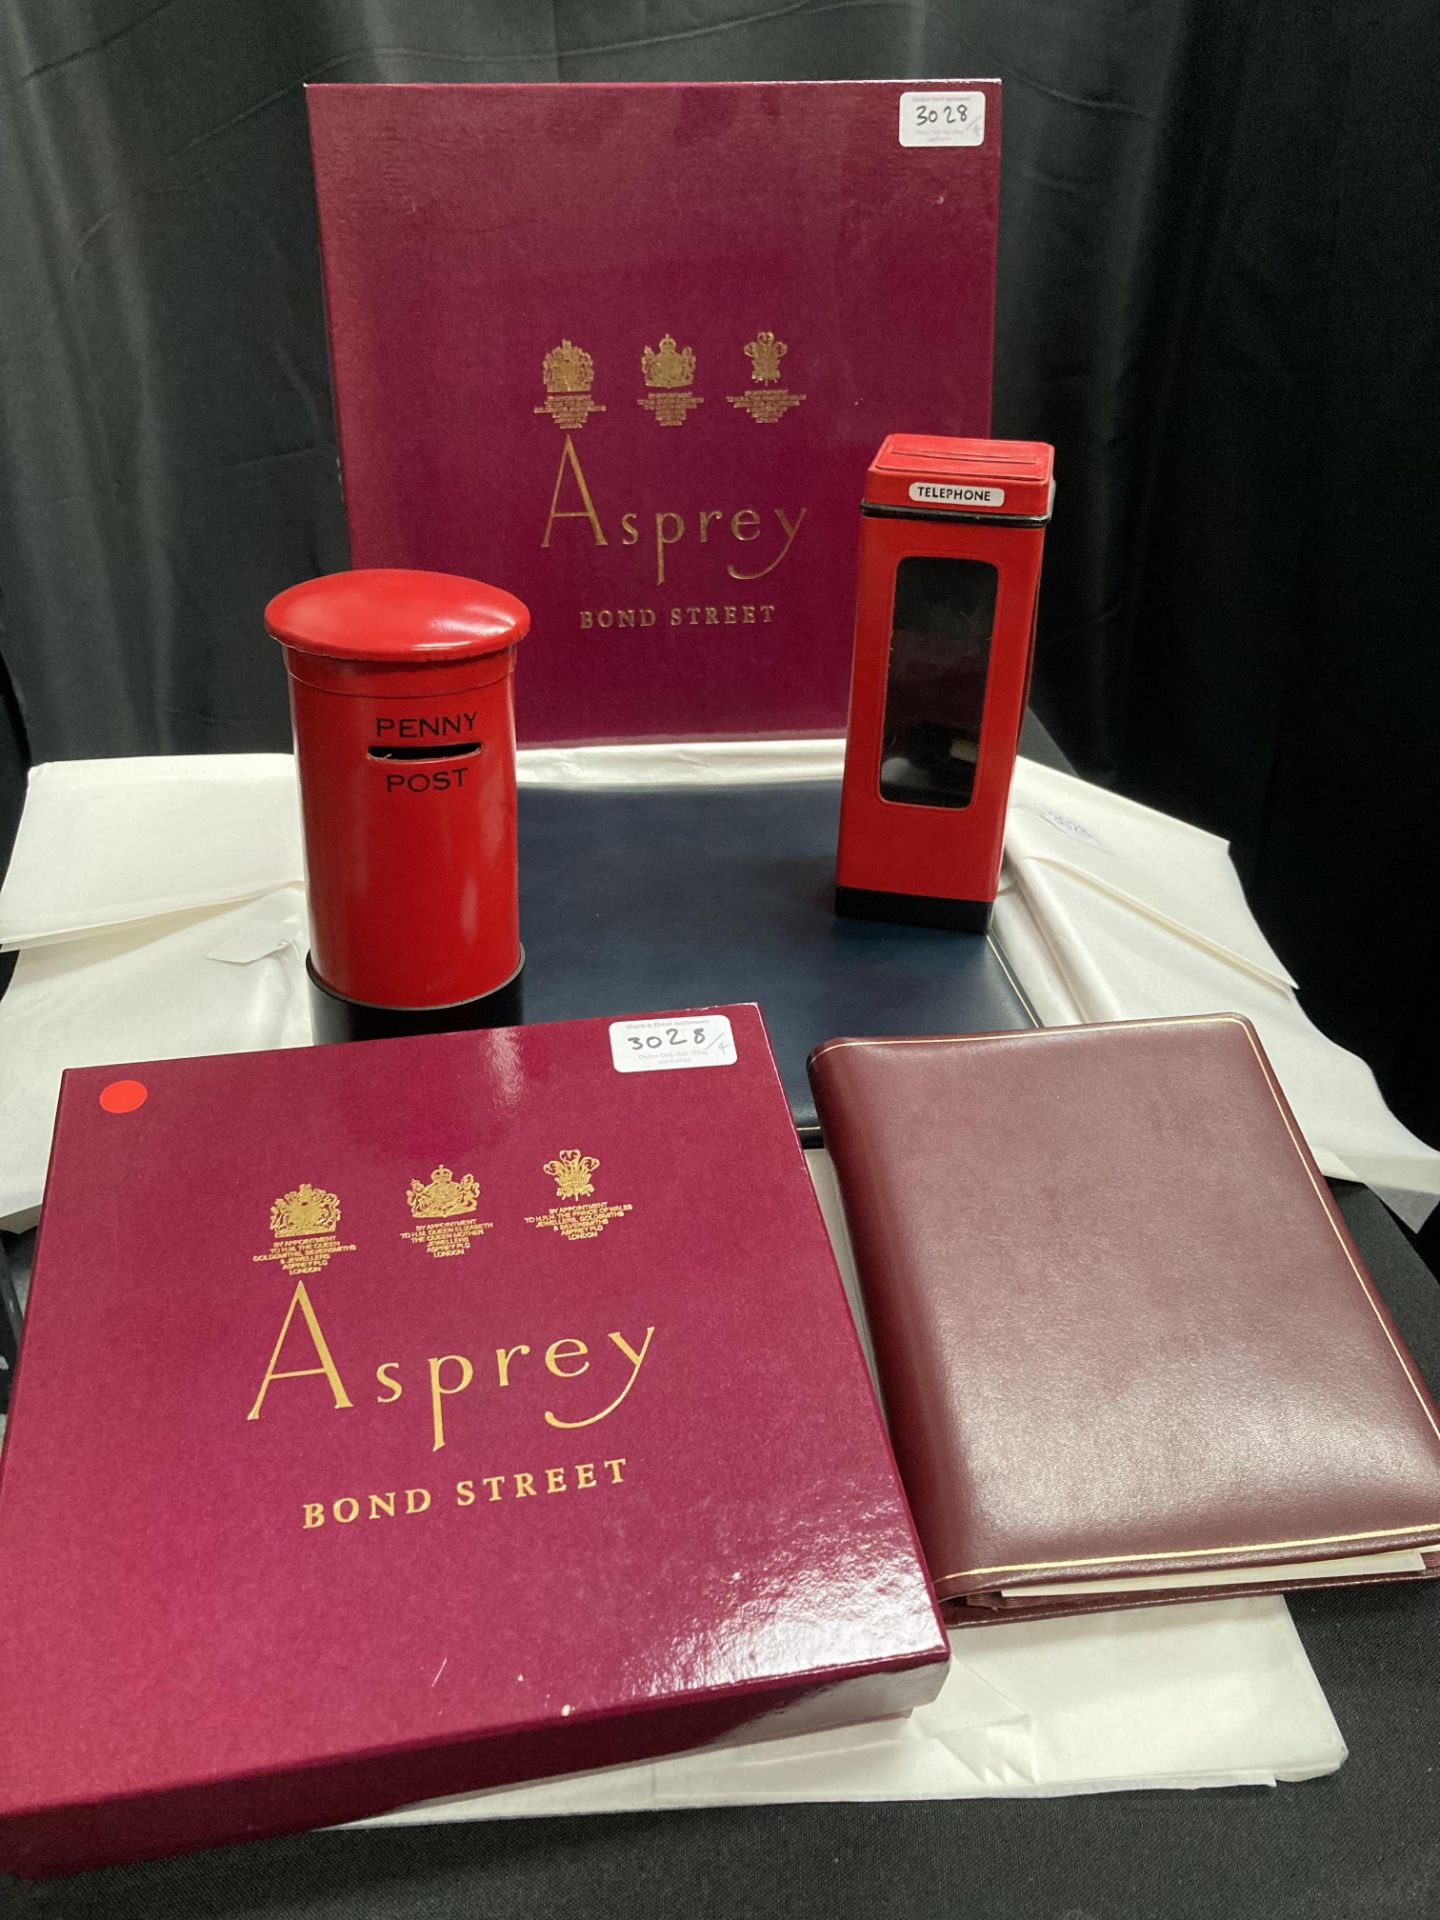 Asprey's leather address book, money box, etc.